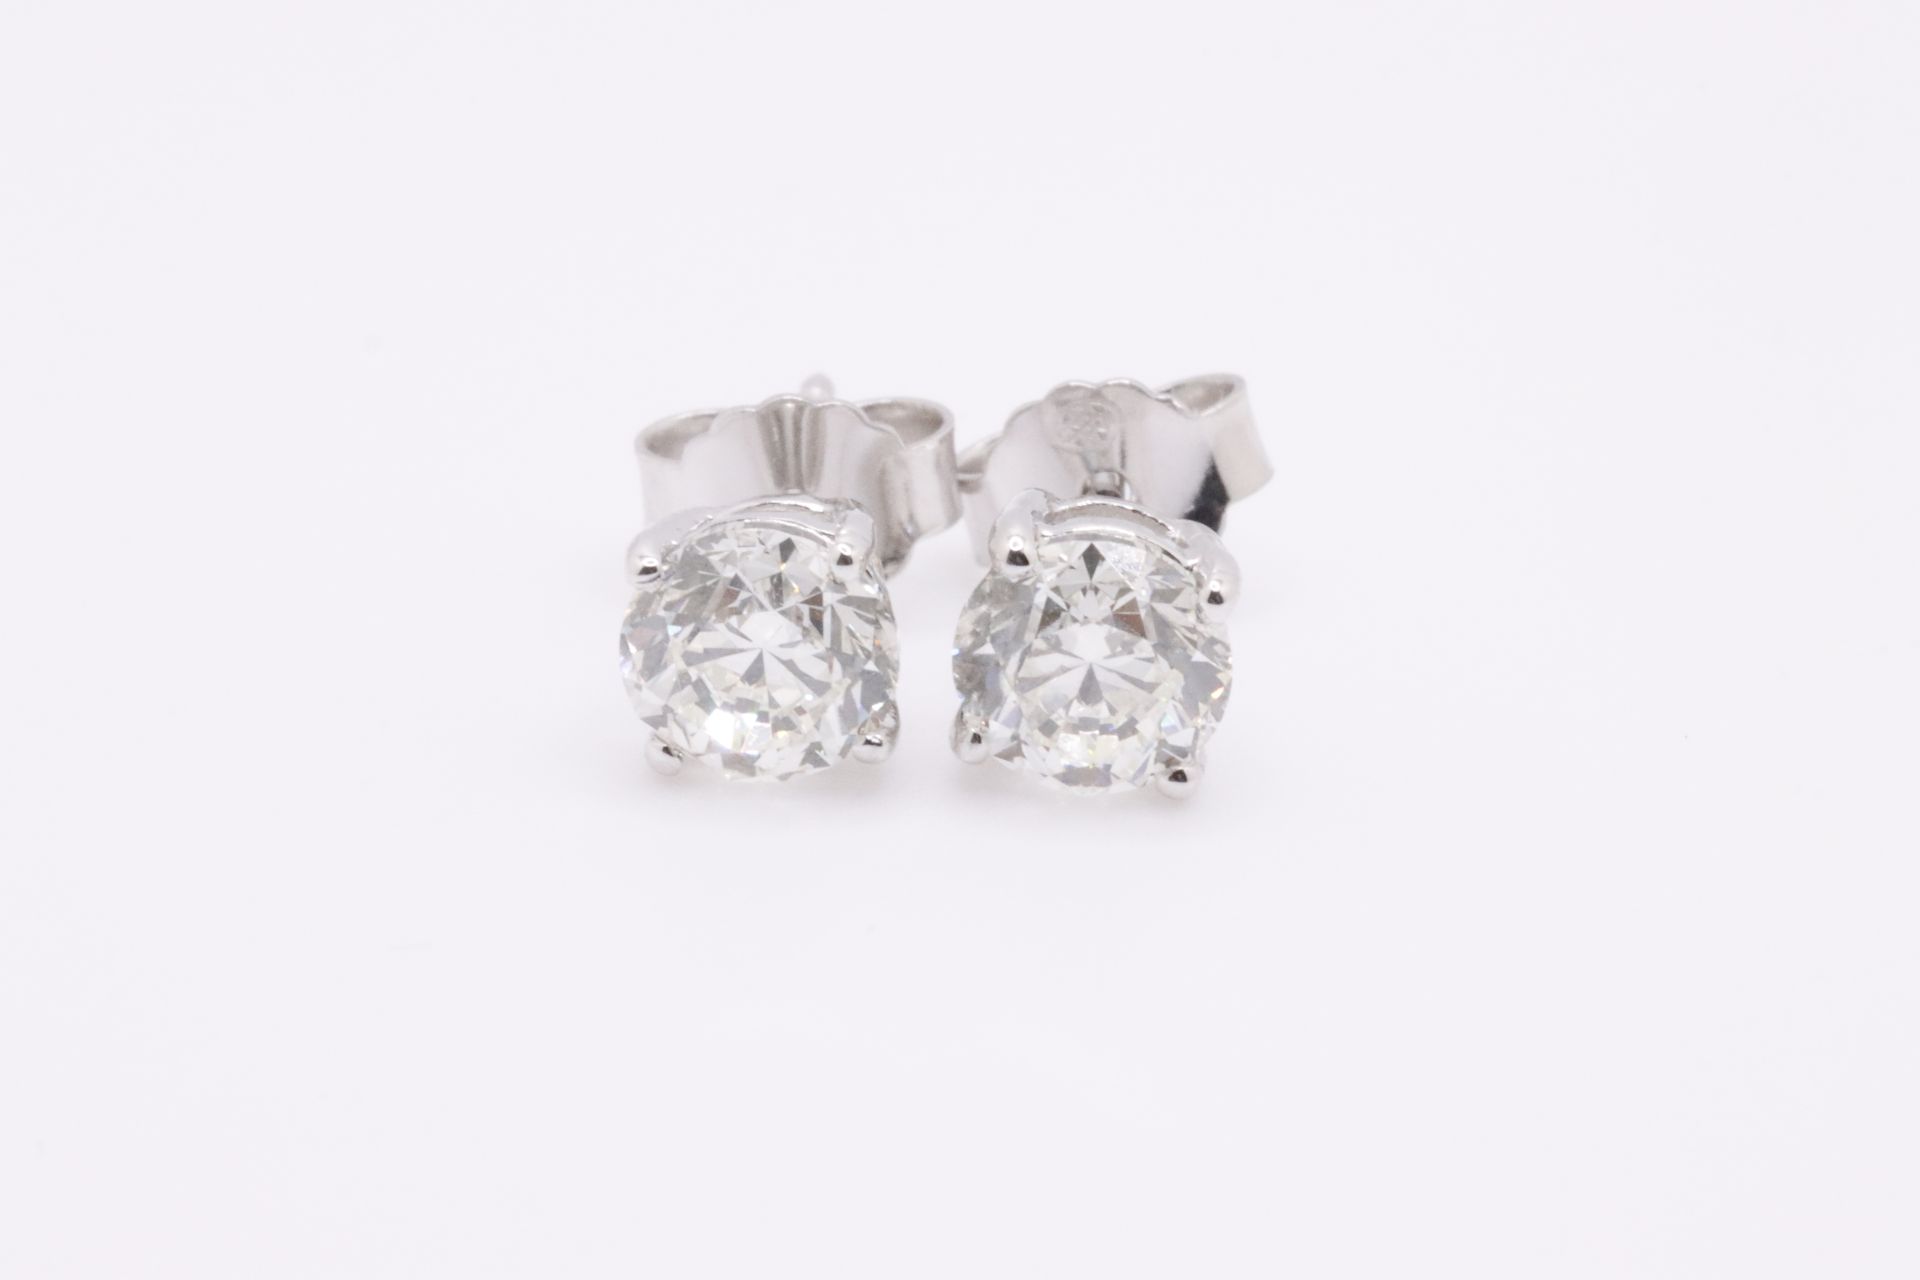 Round Brilliant Cut 1.00 Carat Diamond 18kt White Gold Earrings- F Colour VS Clarity IGI